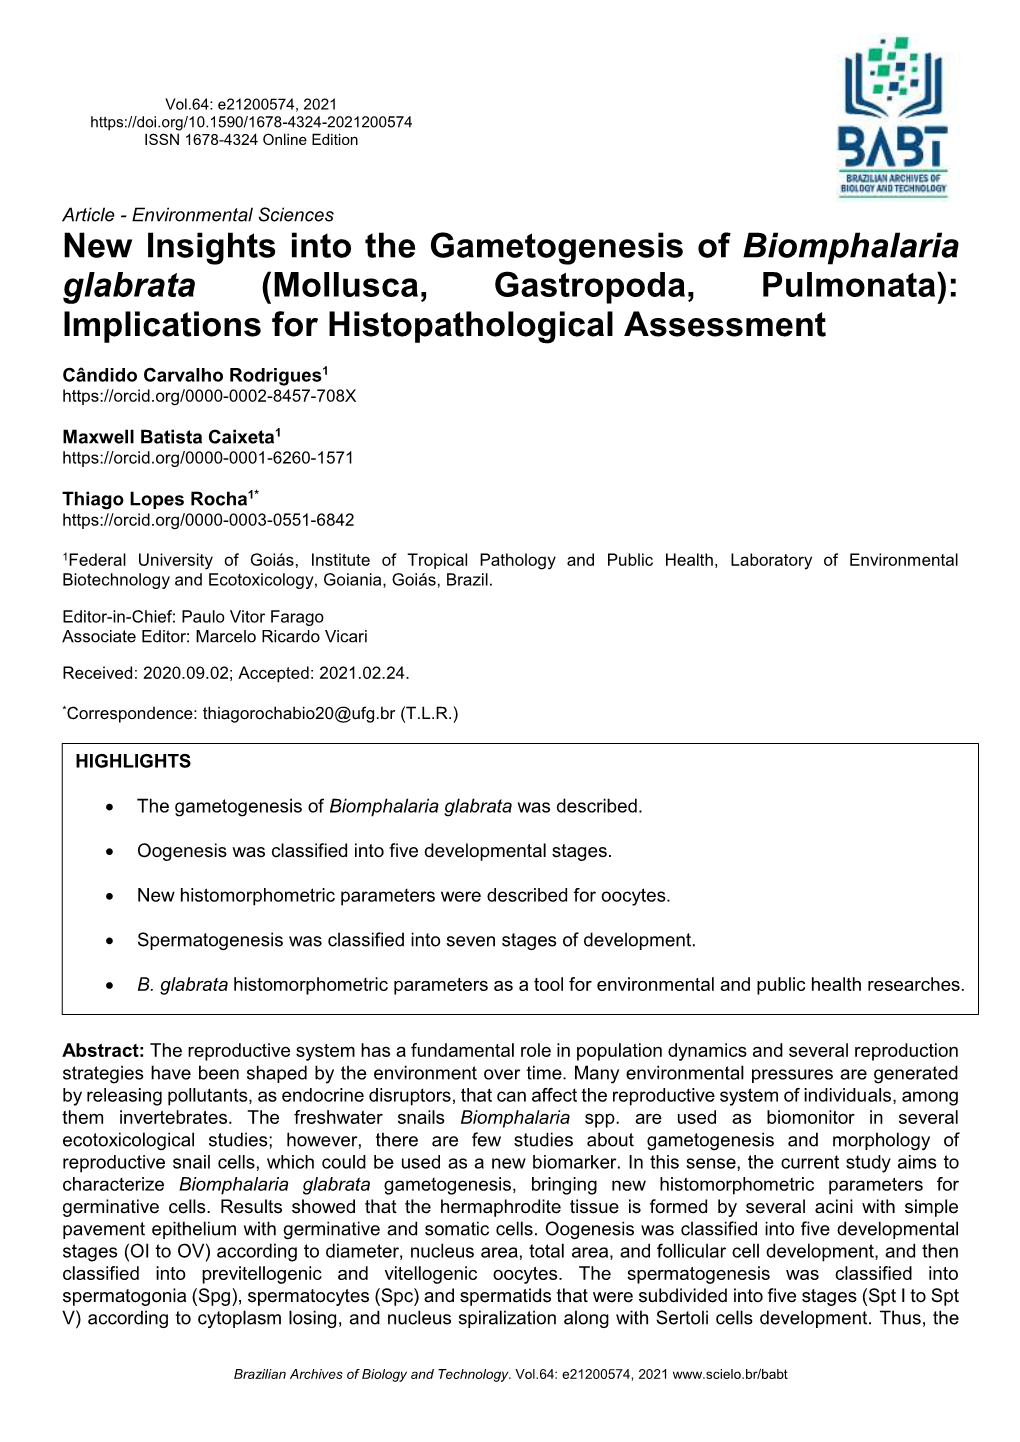 New Insights Into the Gametogenesis of Biomphalaria Glabrata (Mollusca, Gastropoda, Pulmonata): Implications for Histopathological Assessment